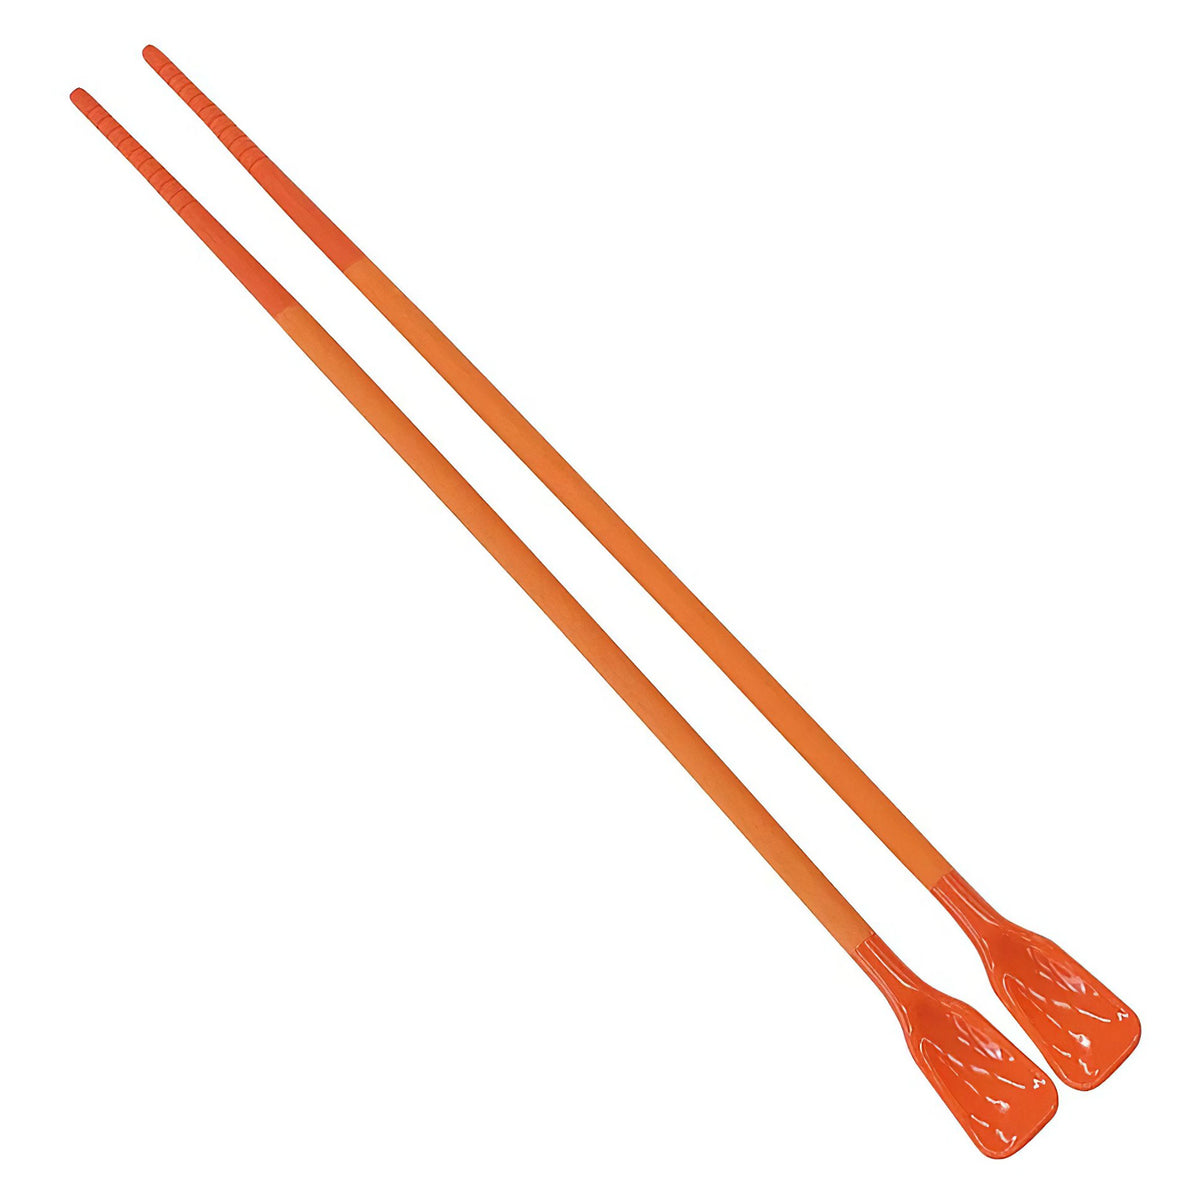 Oizumi Silicone Cooking Chopsticks